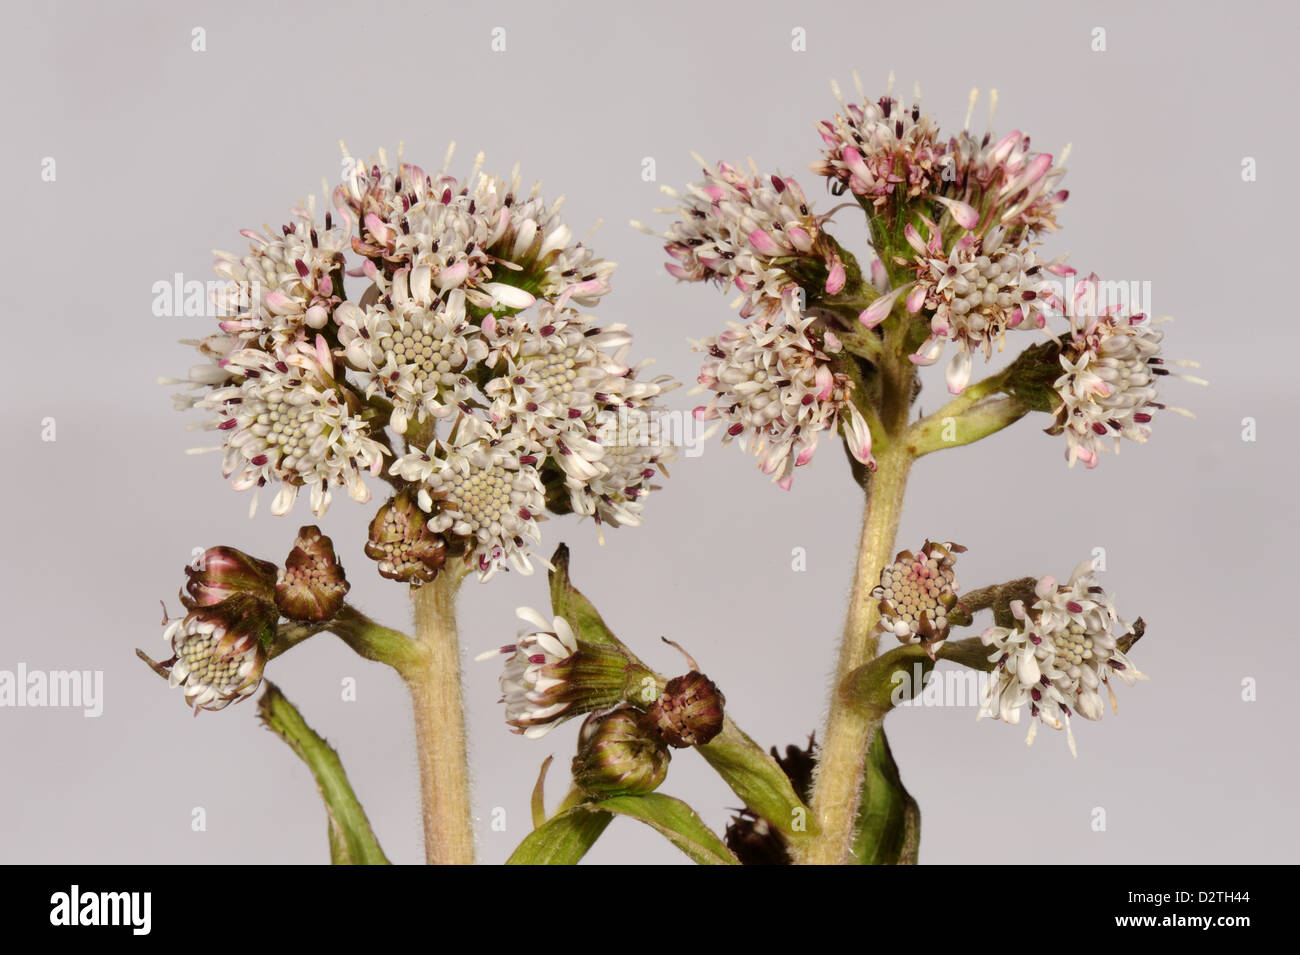 Flower spikes of common butterbur, Petasites hybridus, an early flowering composite plant Stock Photo